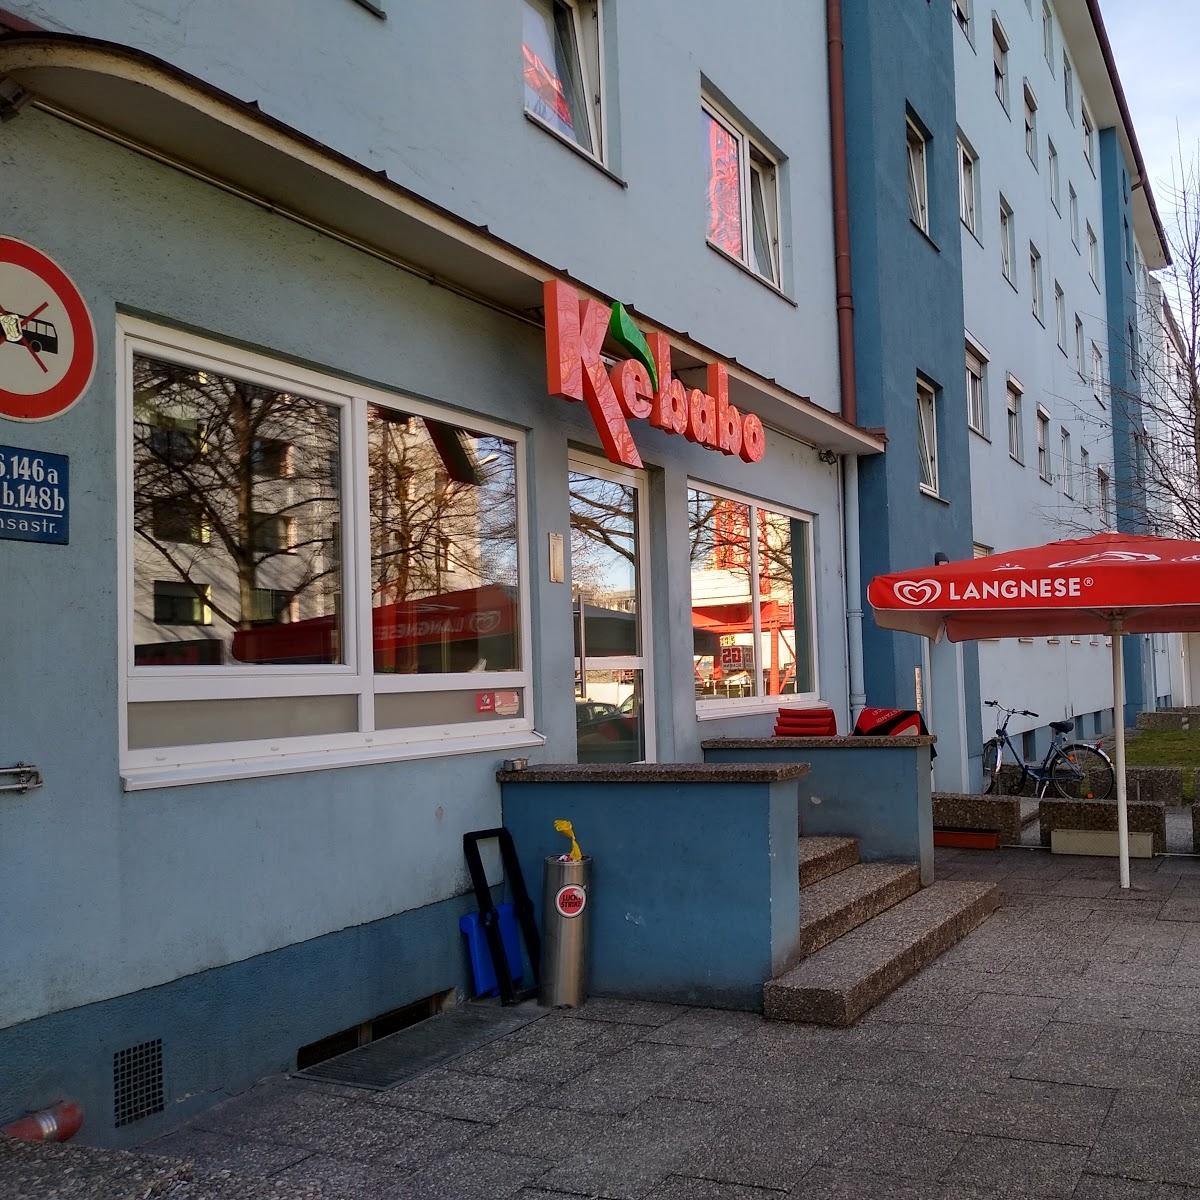 Restaurant "Kebabo" in München